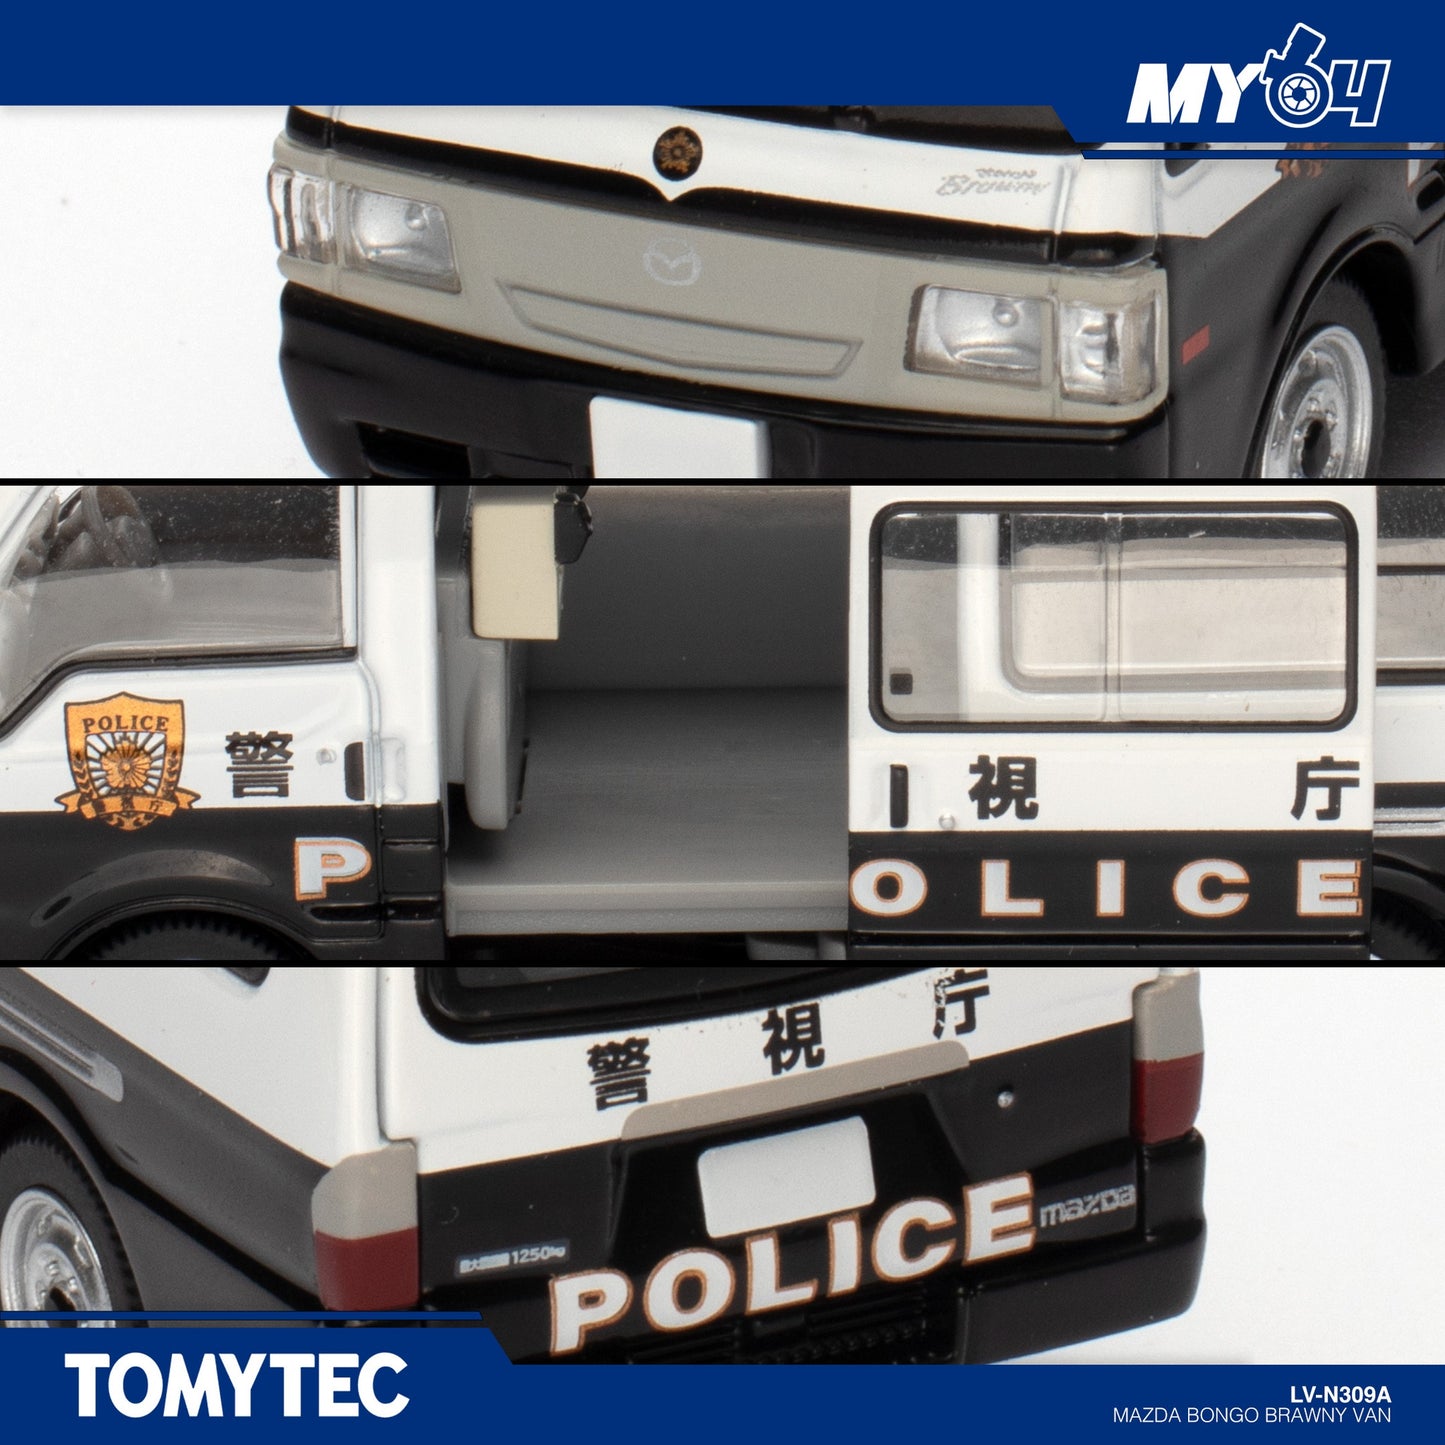 [TOMYTEC] Bongo Brawny Guide Sign Car Police Headquaters